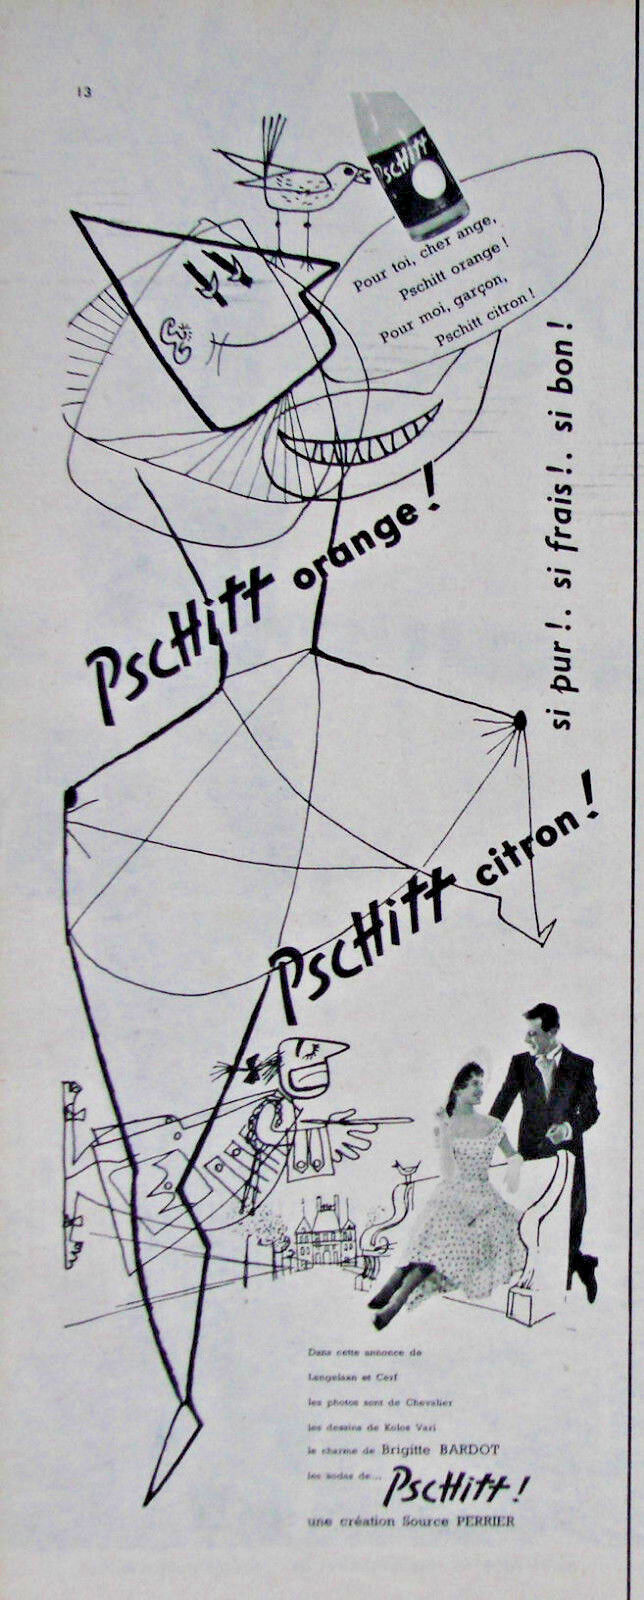 1955 PSCHITT PRESS ADVERTISEMENT LEMON OR ORANGE PERRIER WITH BRIGITTE BARDOT